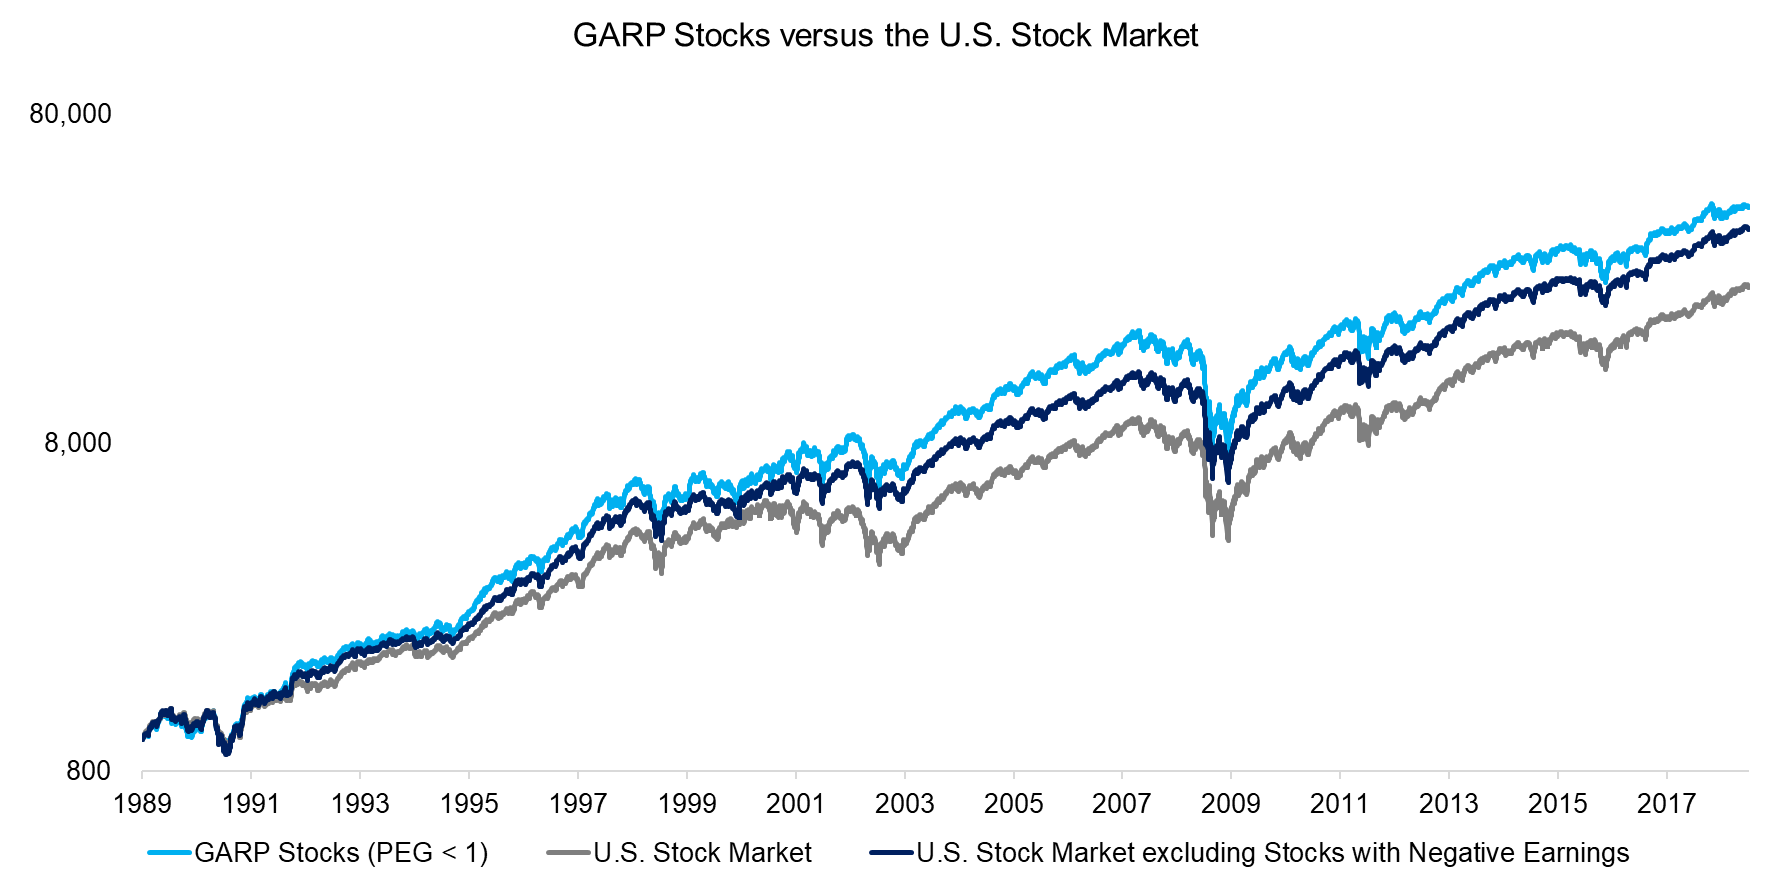 GARP Stocks versus the U.S. Stock Market